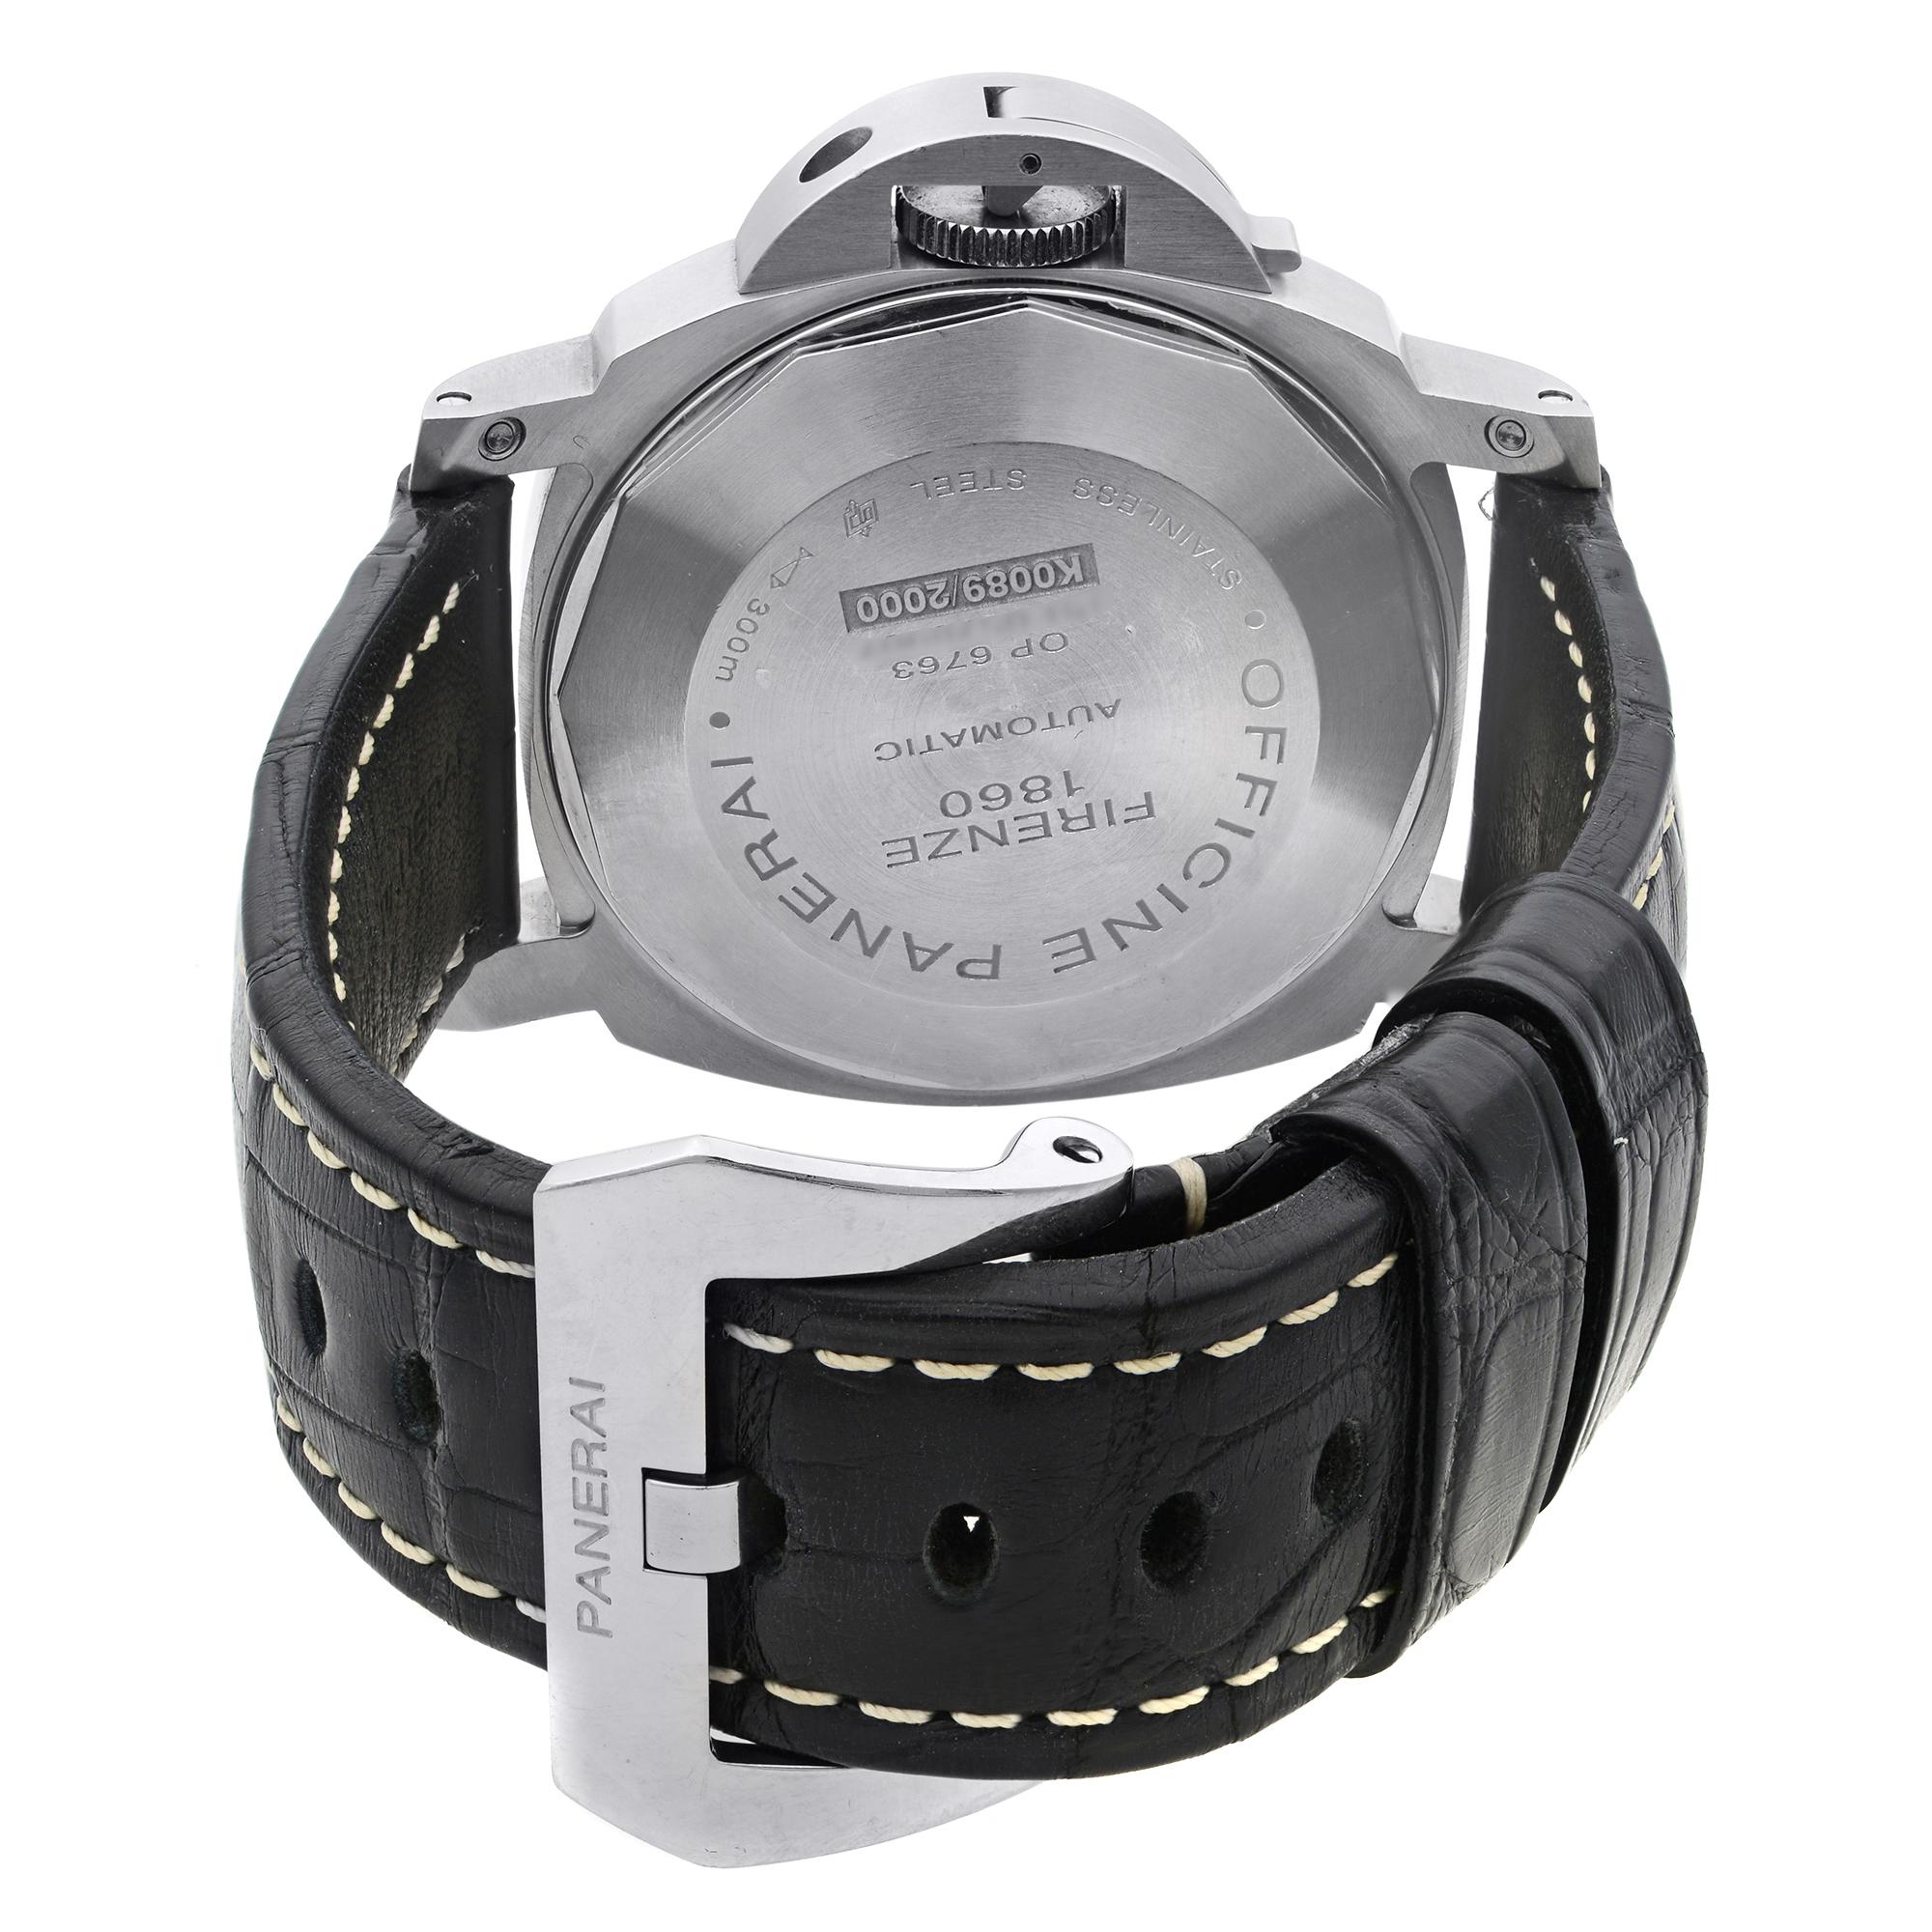 Panerai Luminor Marina Stainless Steel Black Dial Automatic Men's Watch PAM00104 2